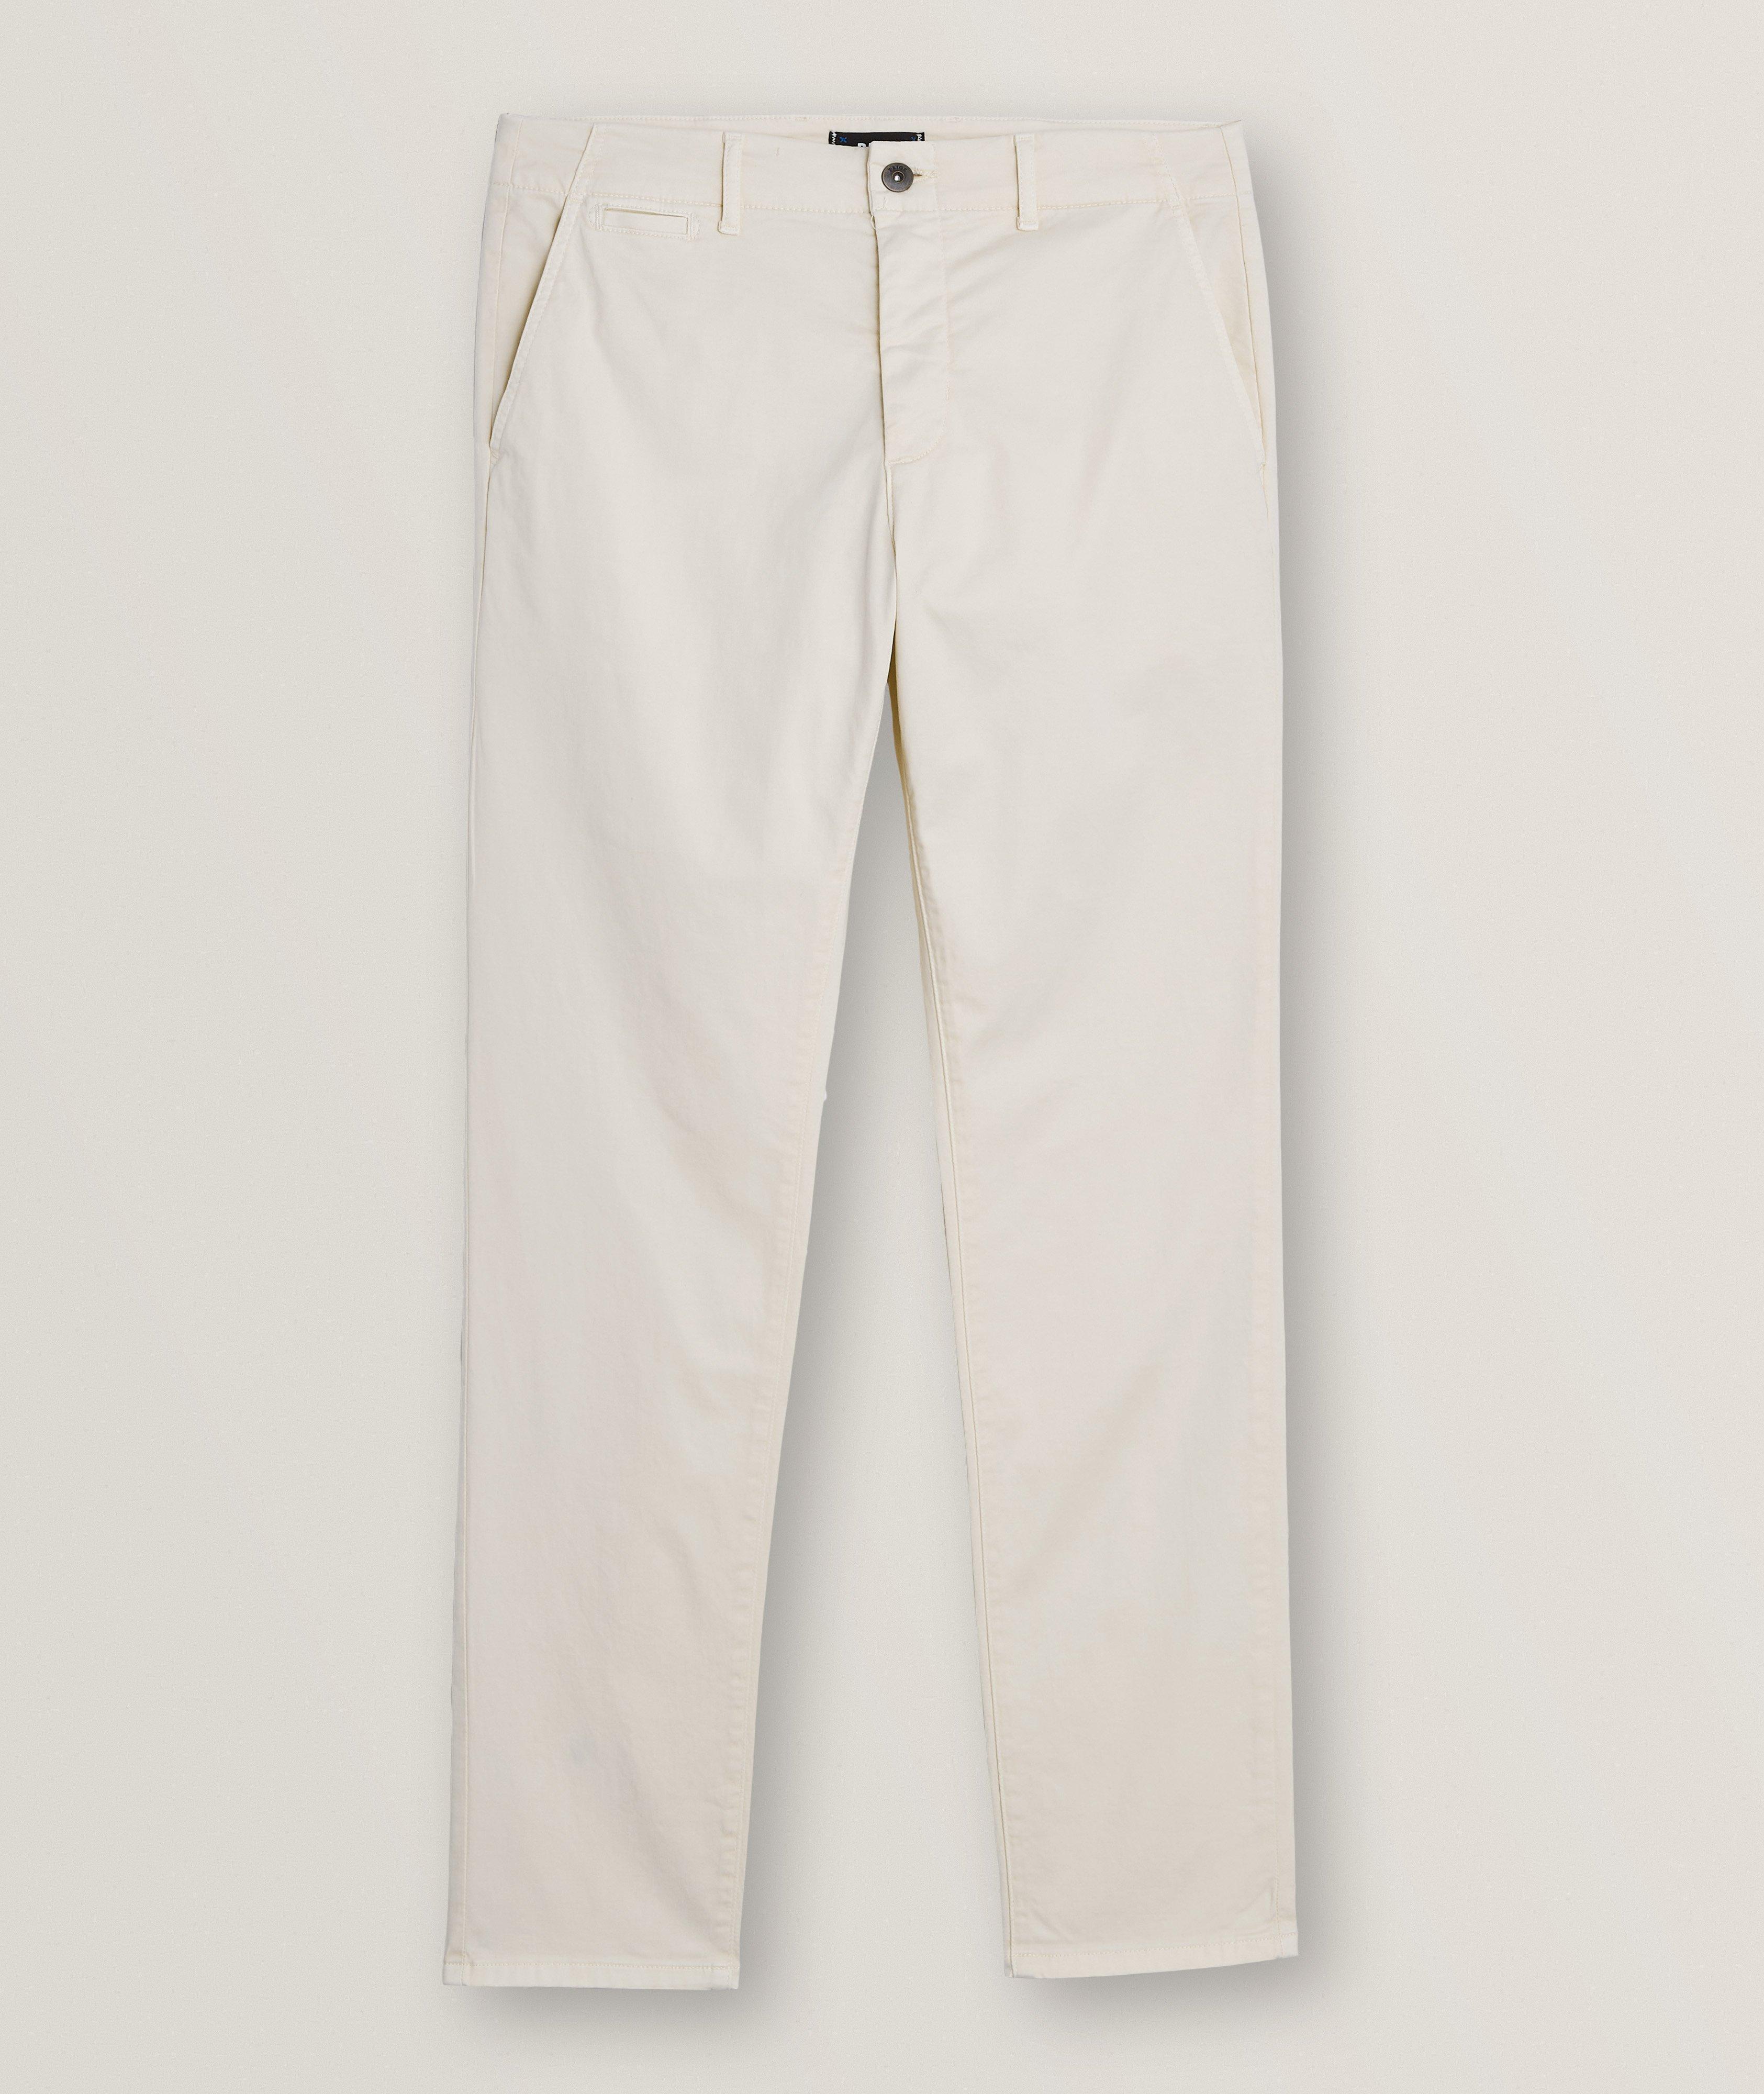 Danford Slim Fit Stretch-Cotton Chino Pants image 0